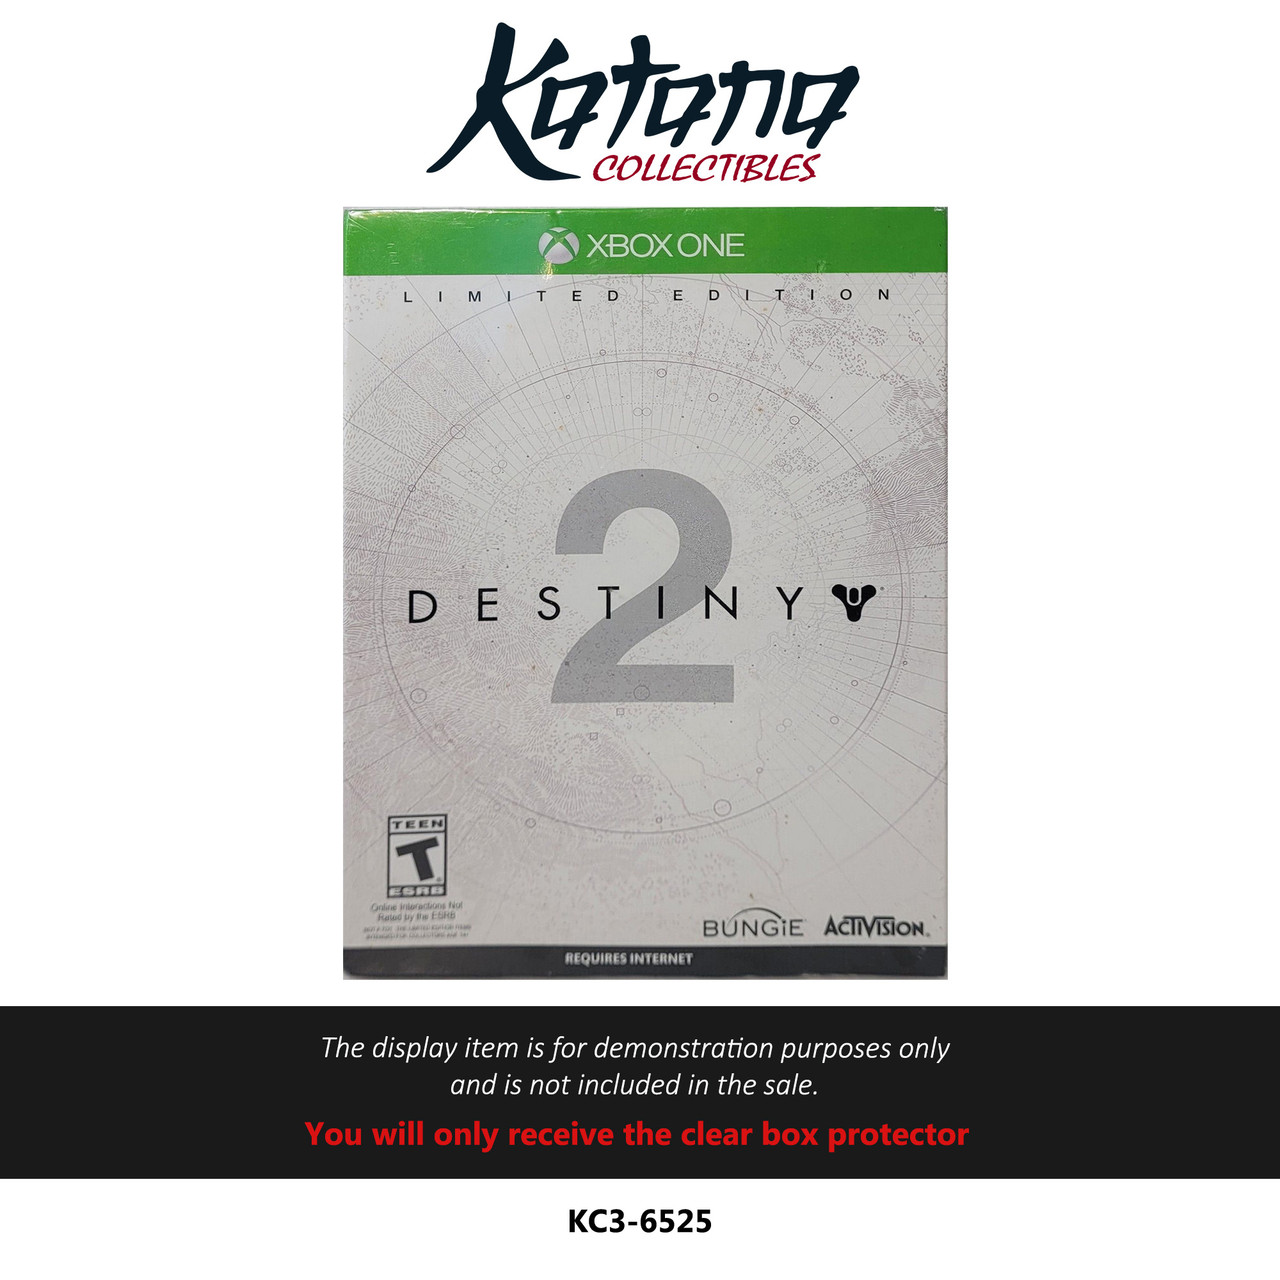 Katana Collectibles Protector For Destiny 2 Collectors Edition - Xbox One